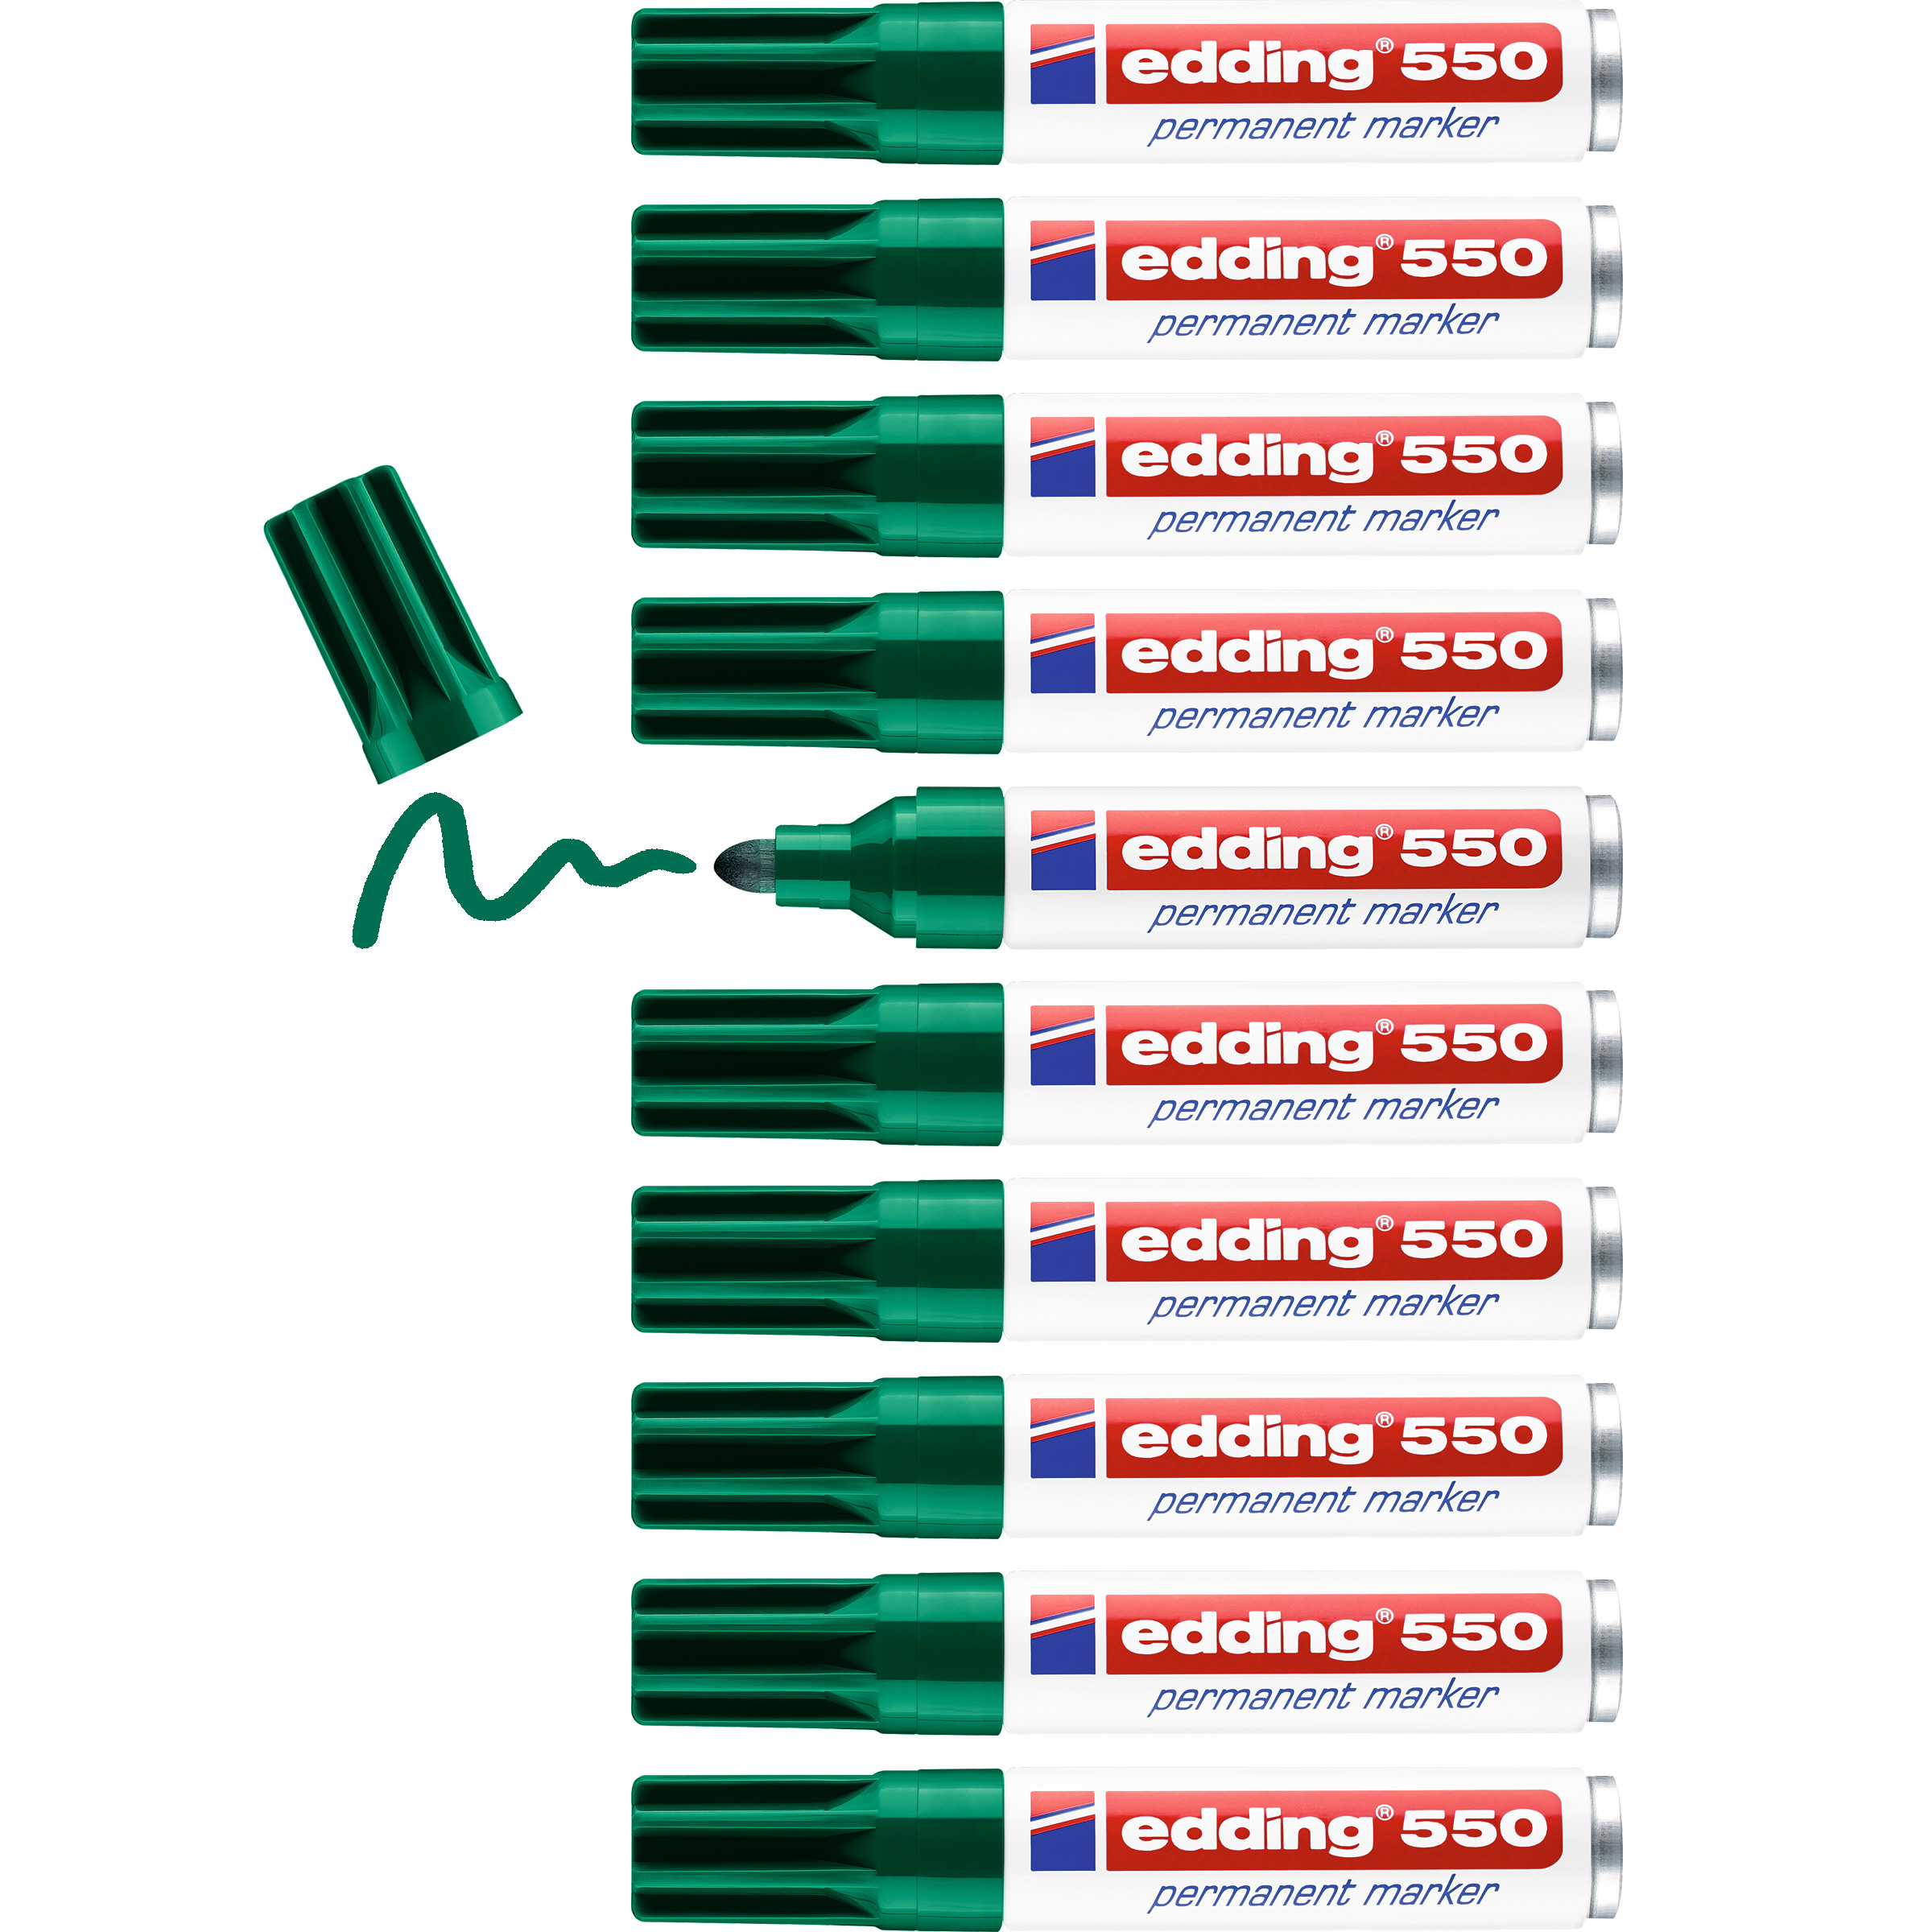 EDDING Marqueur permanent 550 3-4mm 550-4 vert